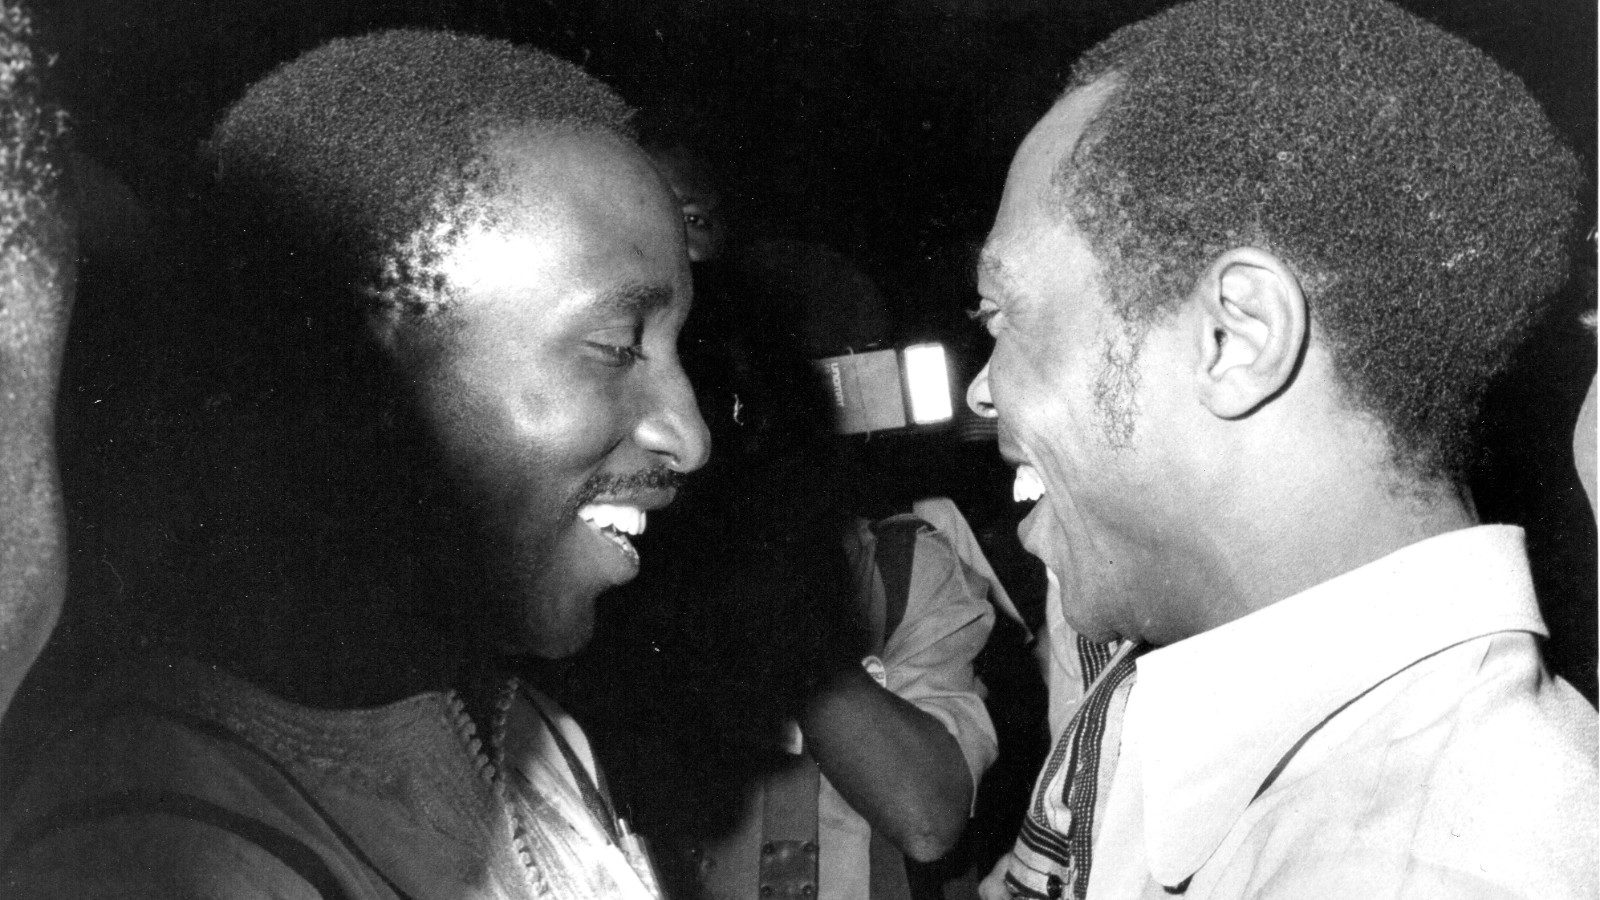 Sankara and Fela